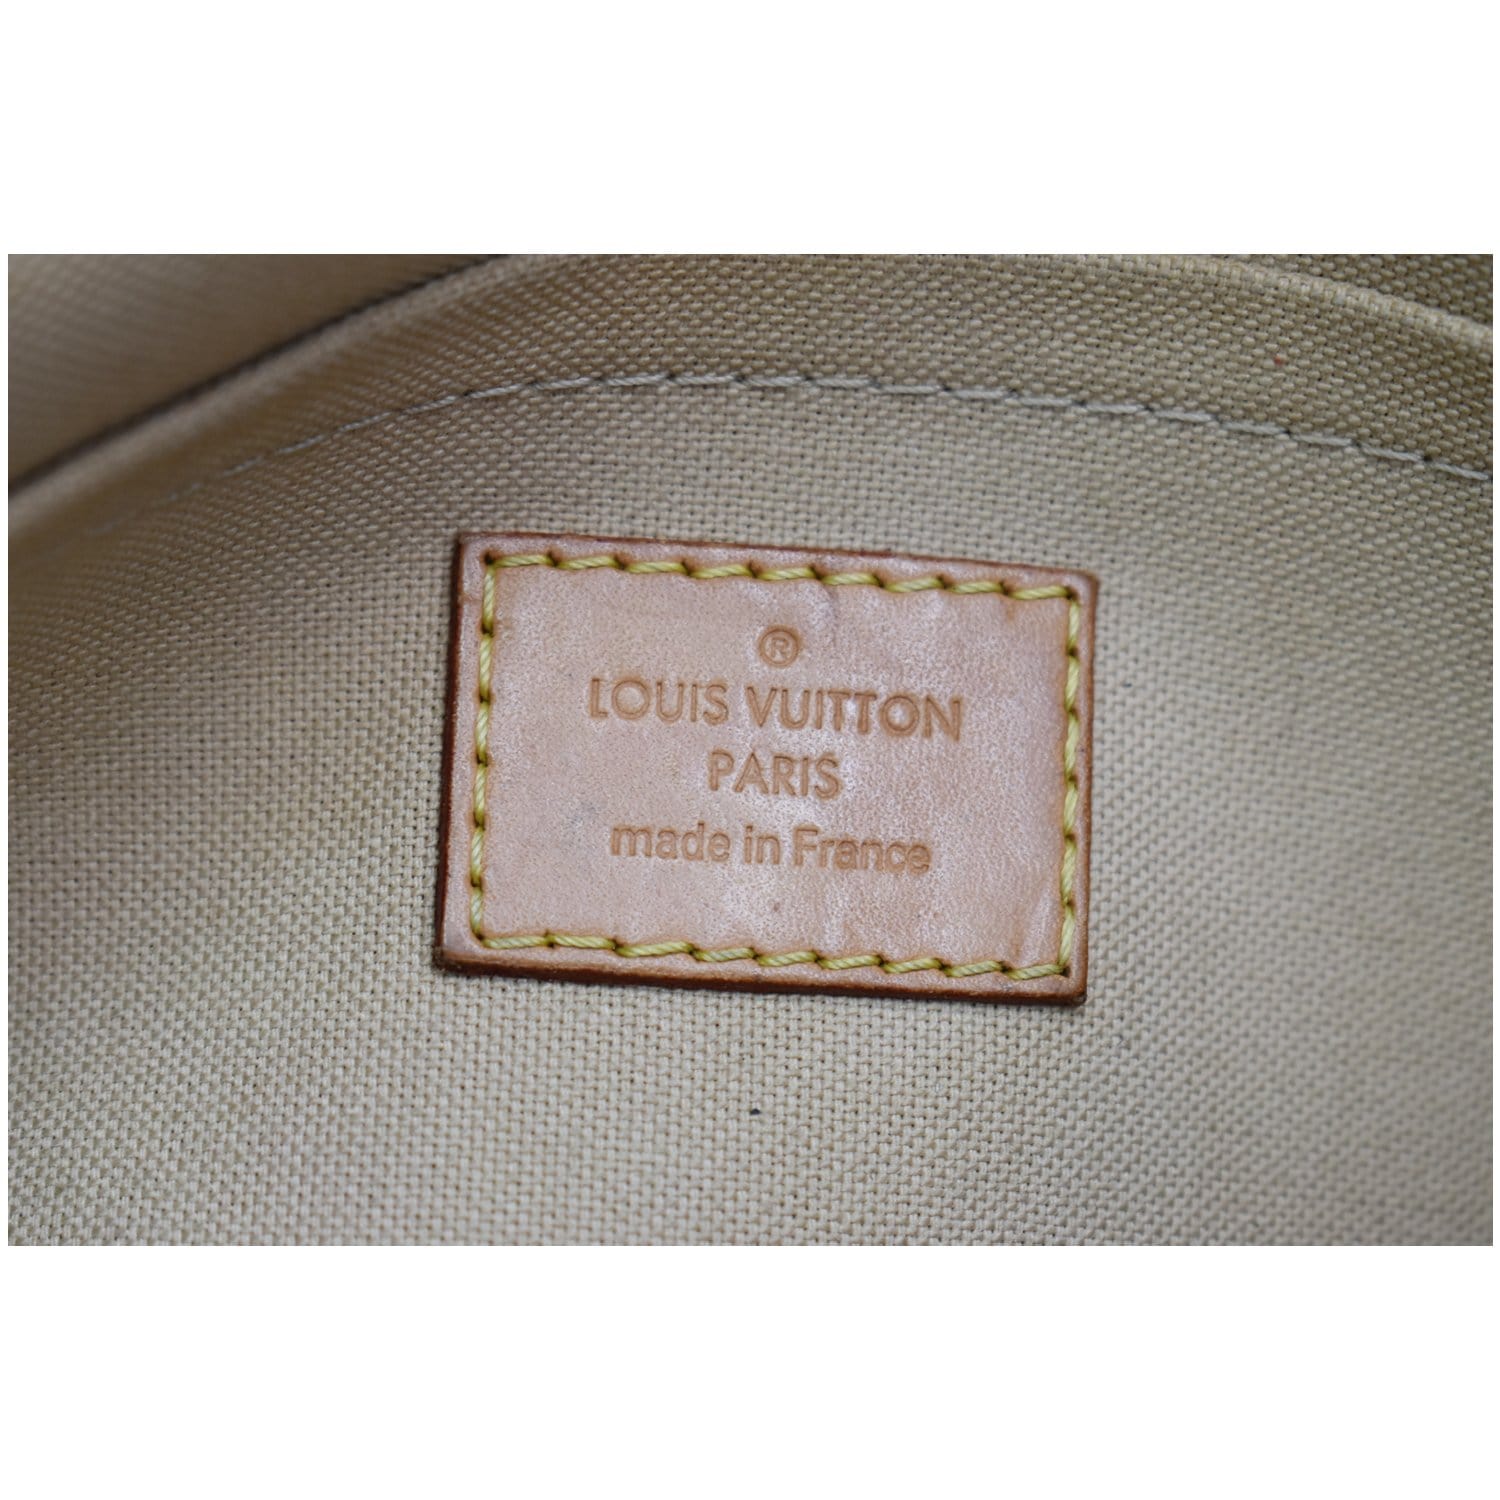 Louis Vuitton Passport ราคาถูก ซื้อออนไลน์ที่ - ก.ย. 2023